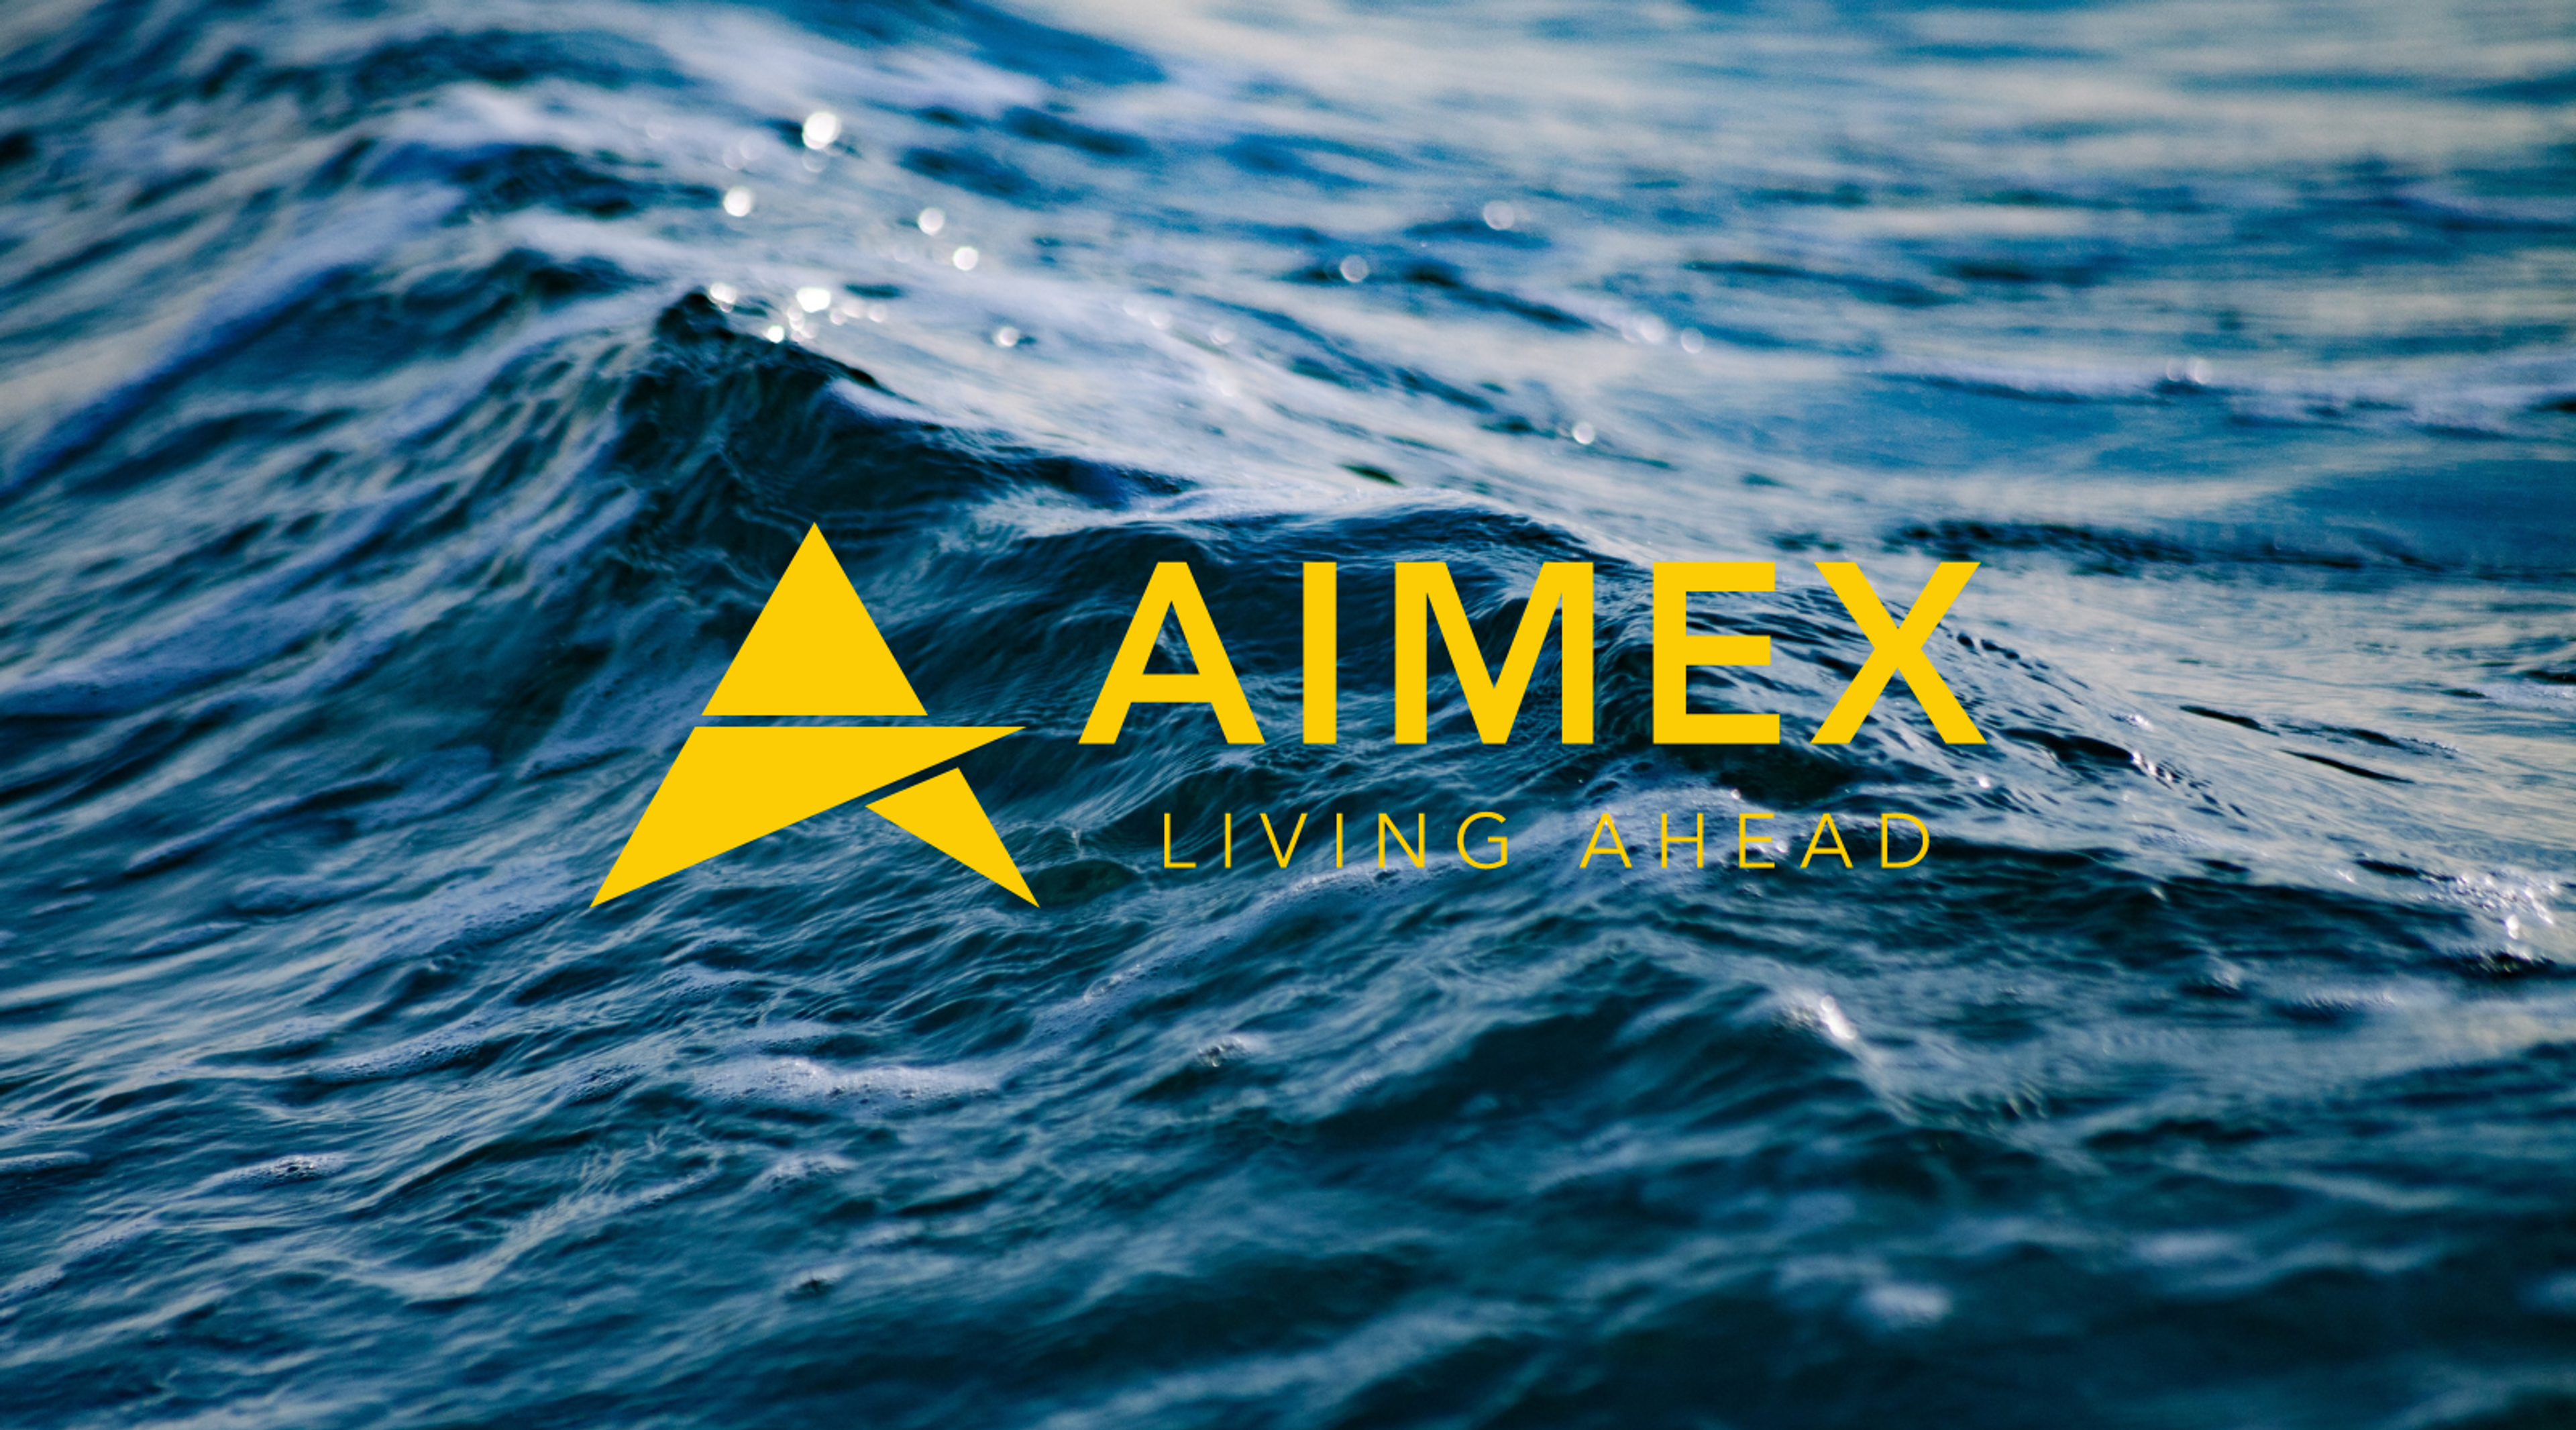 Aimex Australia logo in water background